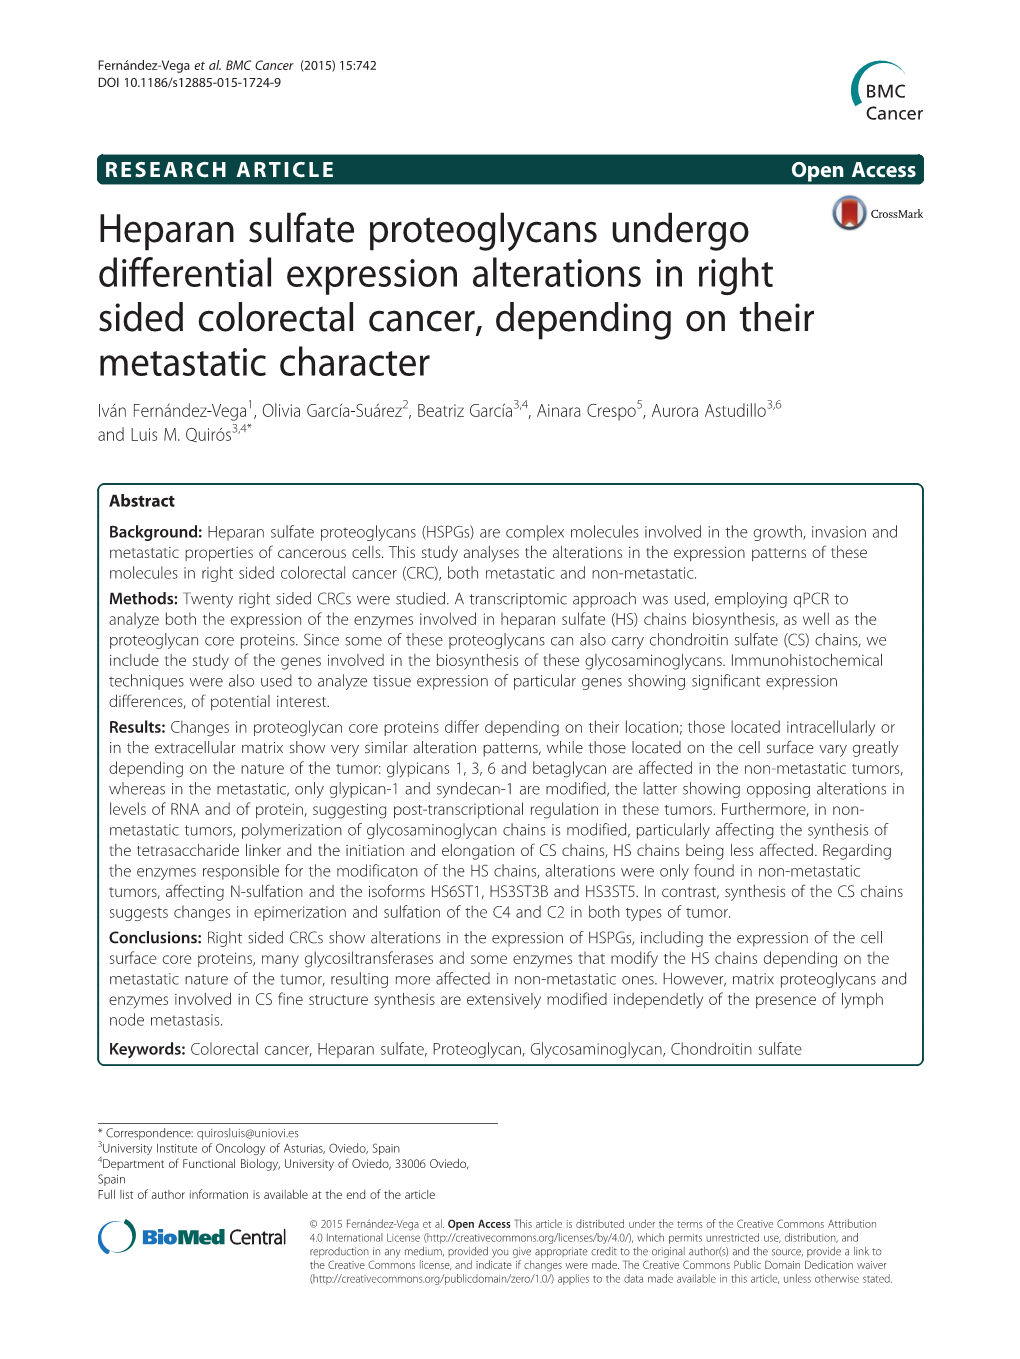 Heparan Sulfate Proteoglycans Undergo Differential